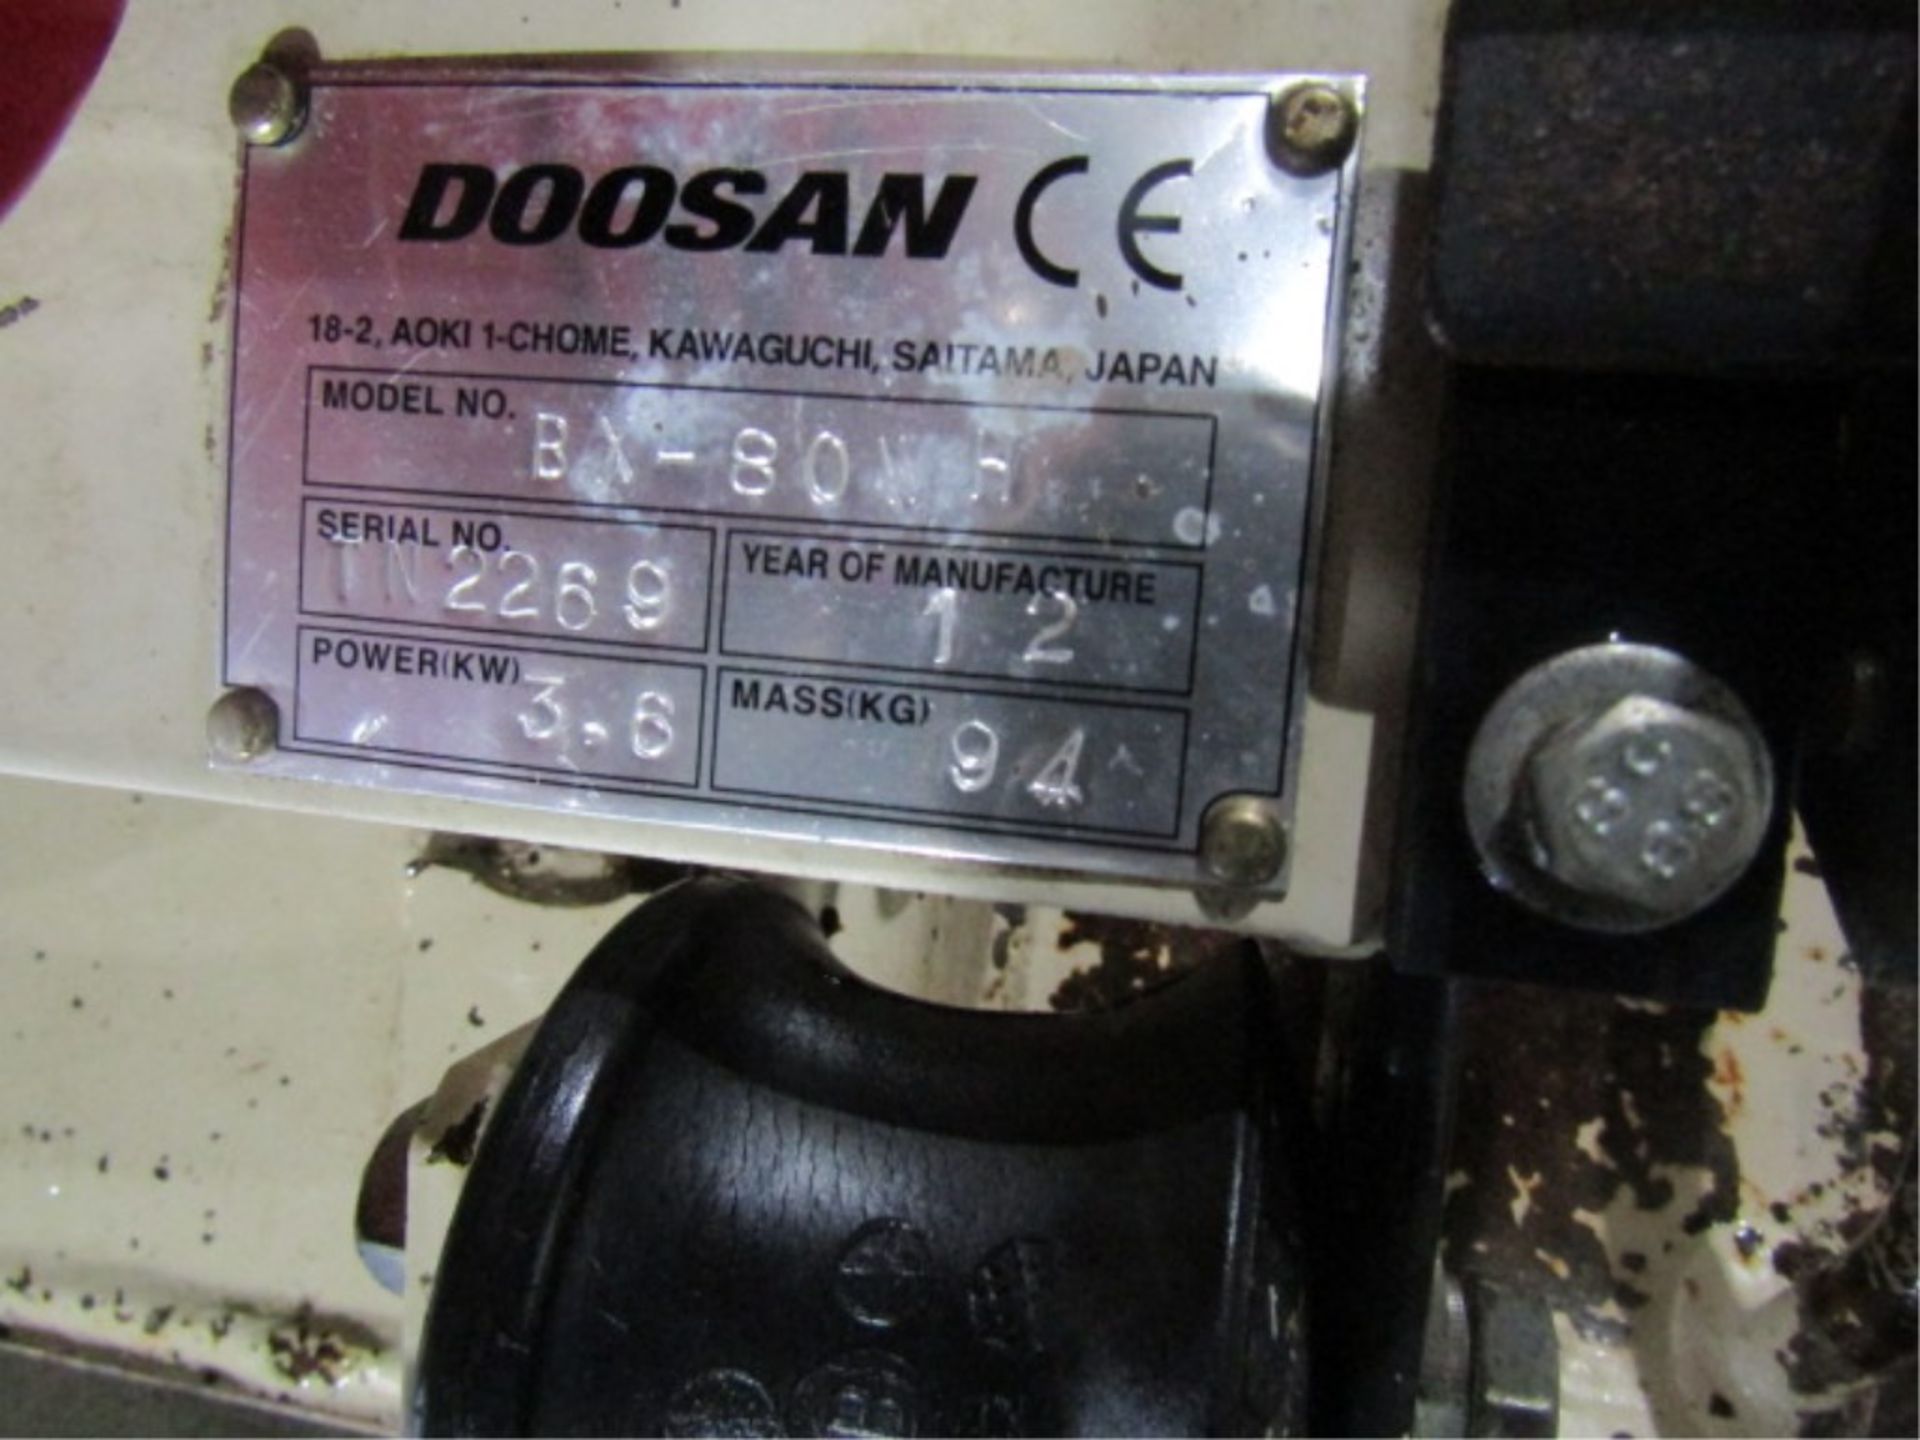 2012 Doqsan Model BX-80WH Plate Compactor, Honda GX160 Motor, Serial # 2269 - Image 5 of 5